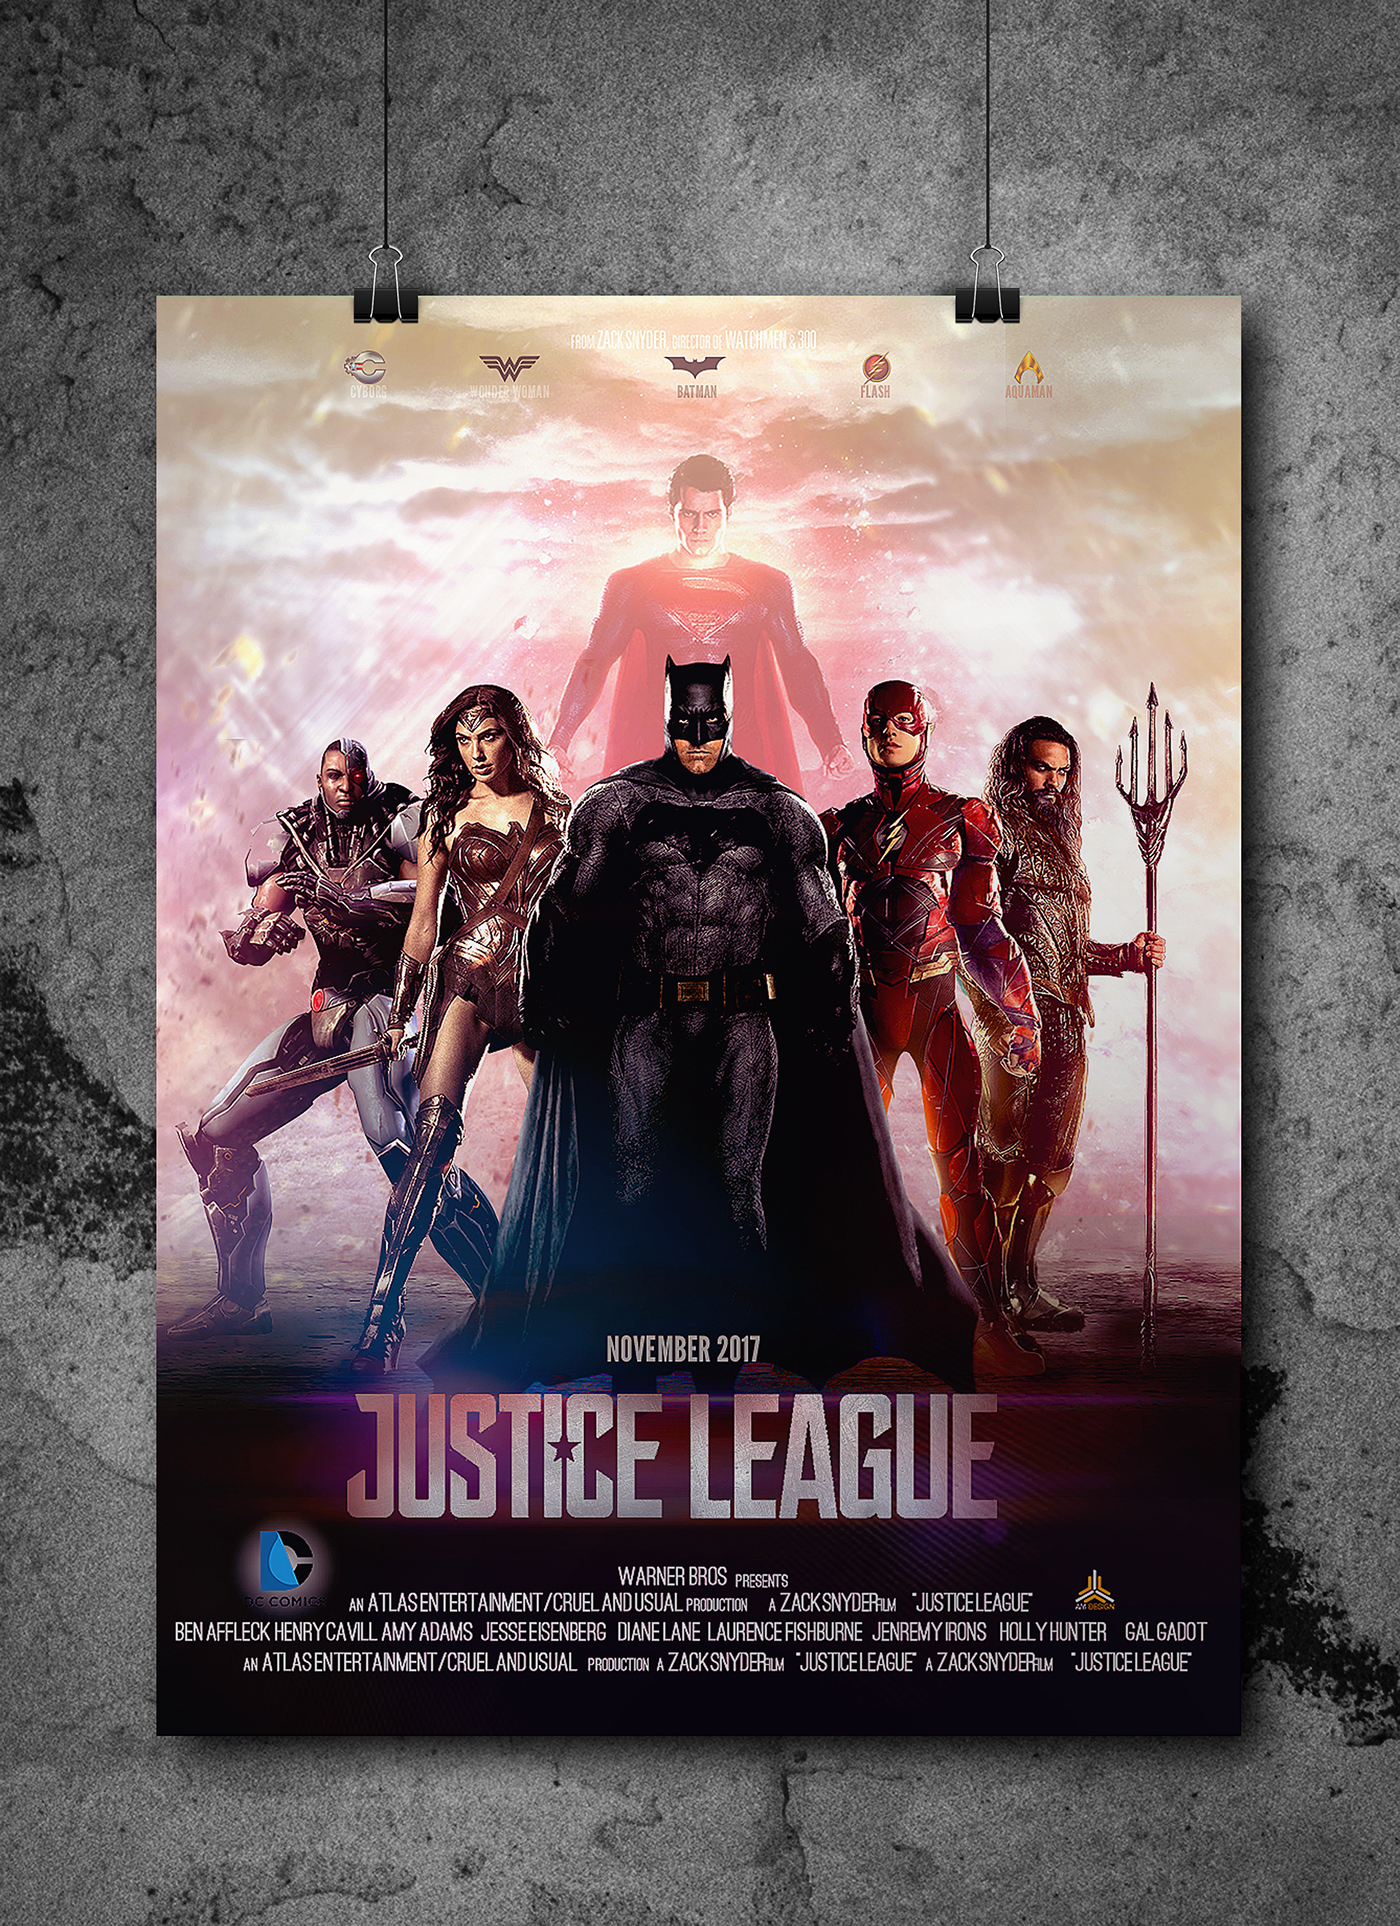 Justice league justice league poster design photoshop graphic movie